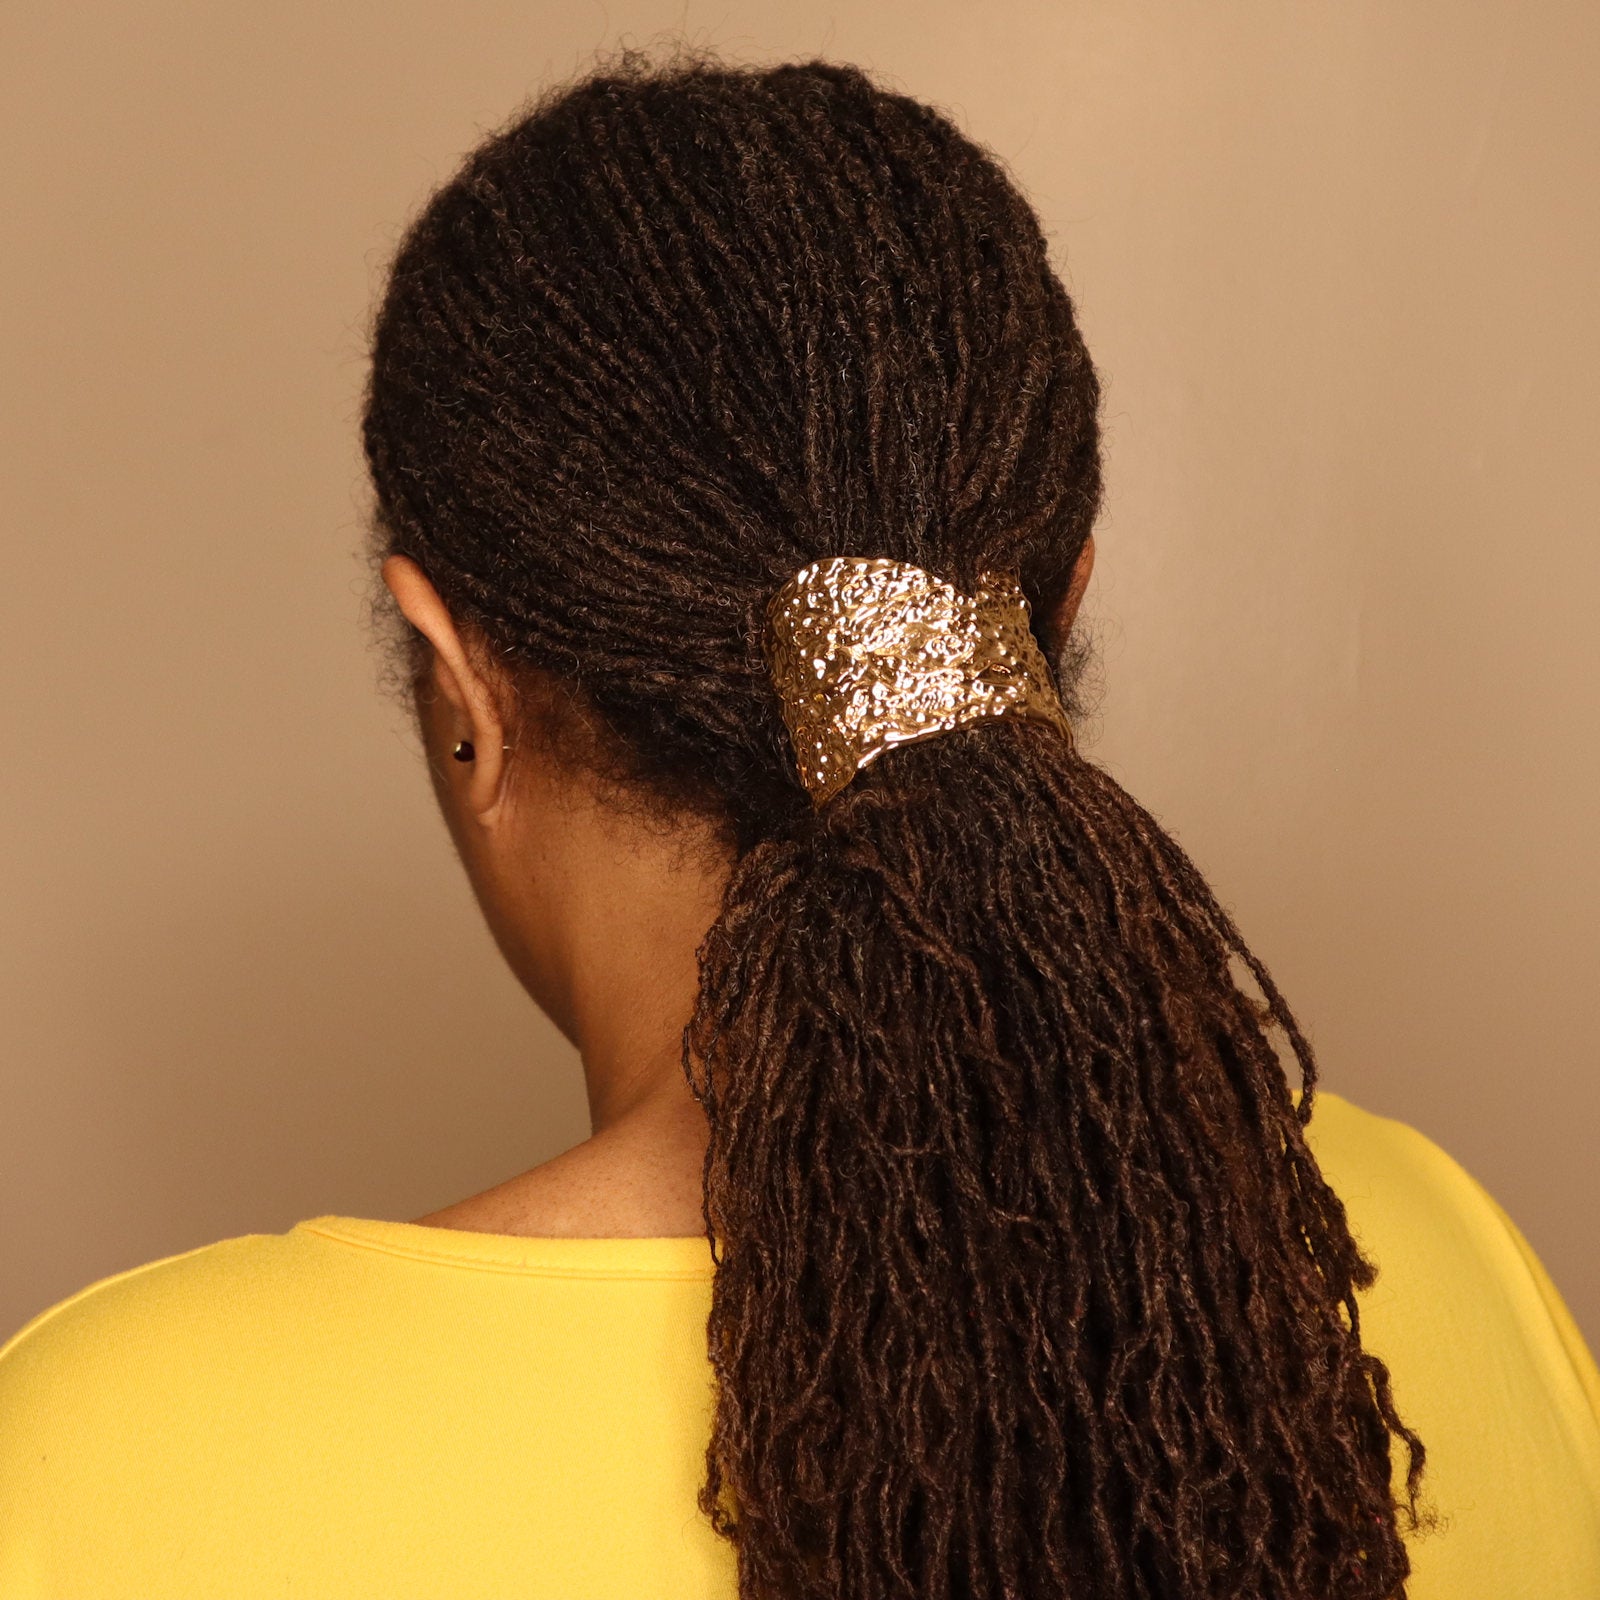  262 Pcs Dreadlock Accessories for Women, Hair Jewelry